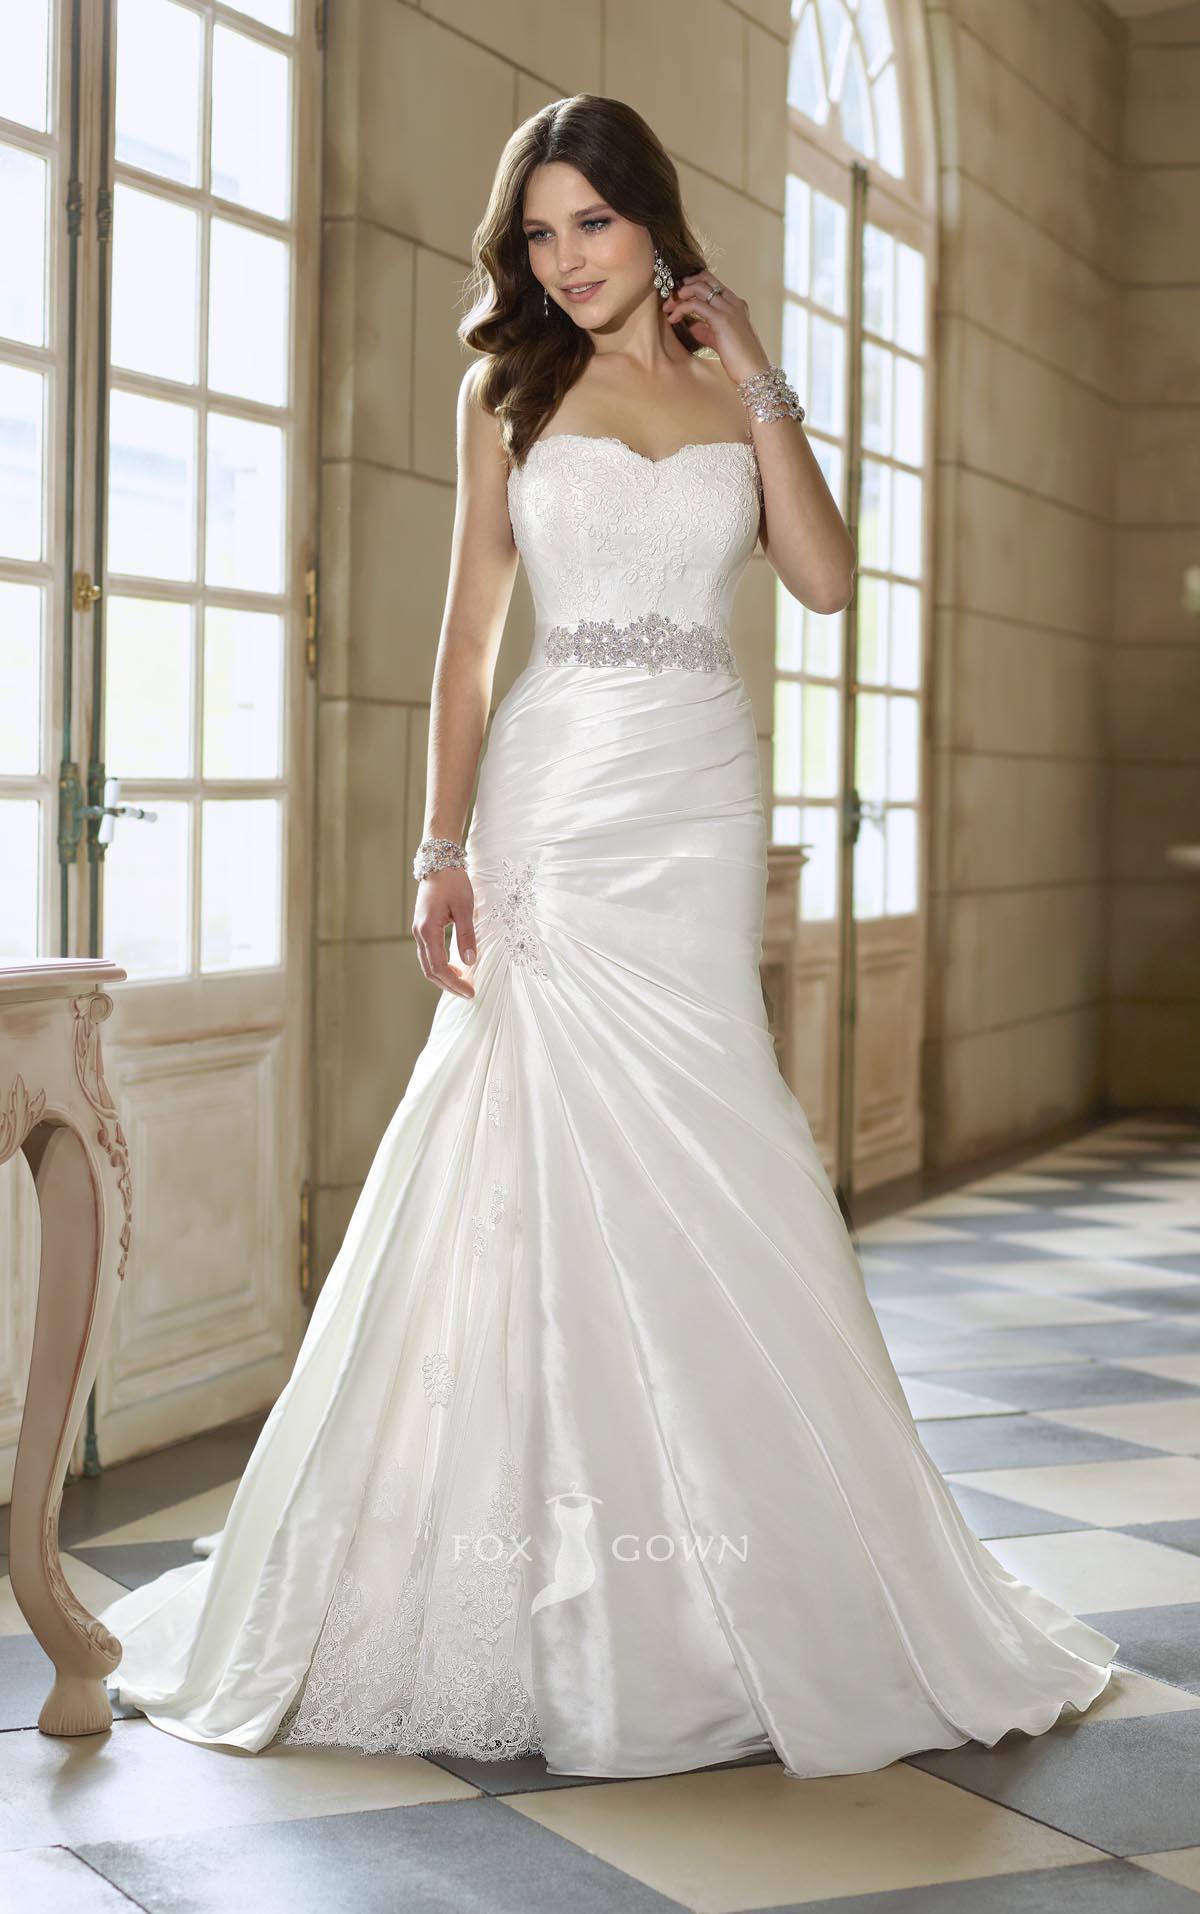 Sexy Wedding Dresses Look Perfect Bride 6051